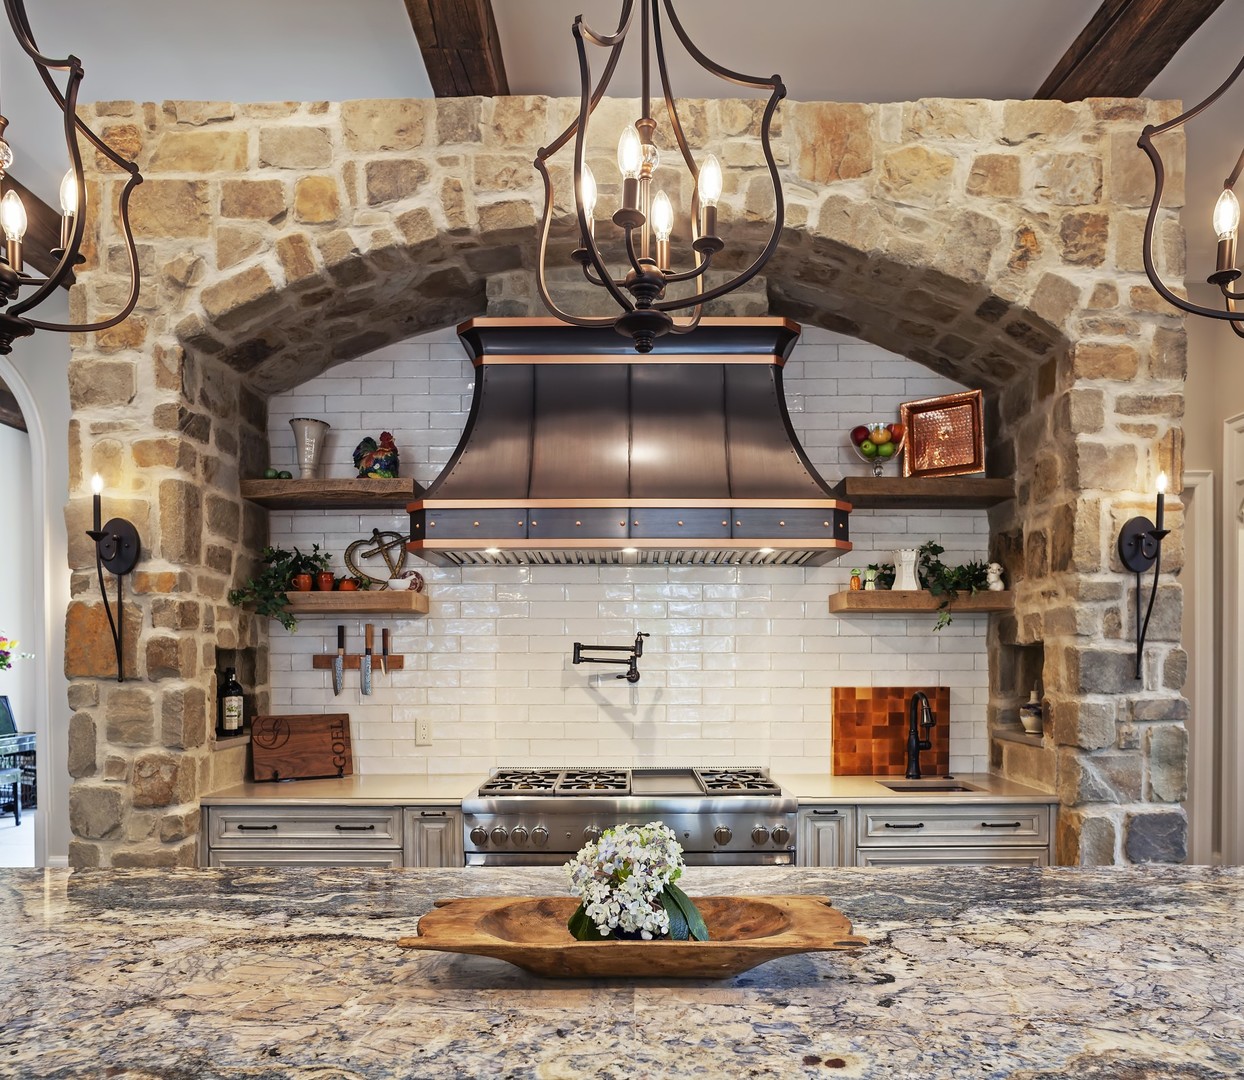 French kitchen design with range hood, white cabinets,marble countertops brick backsplash